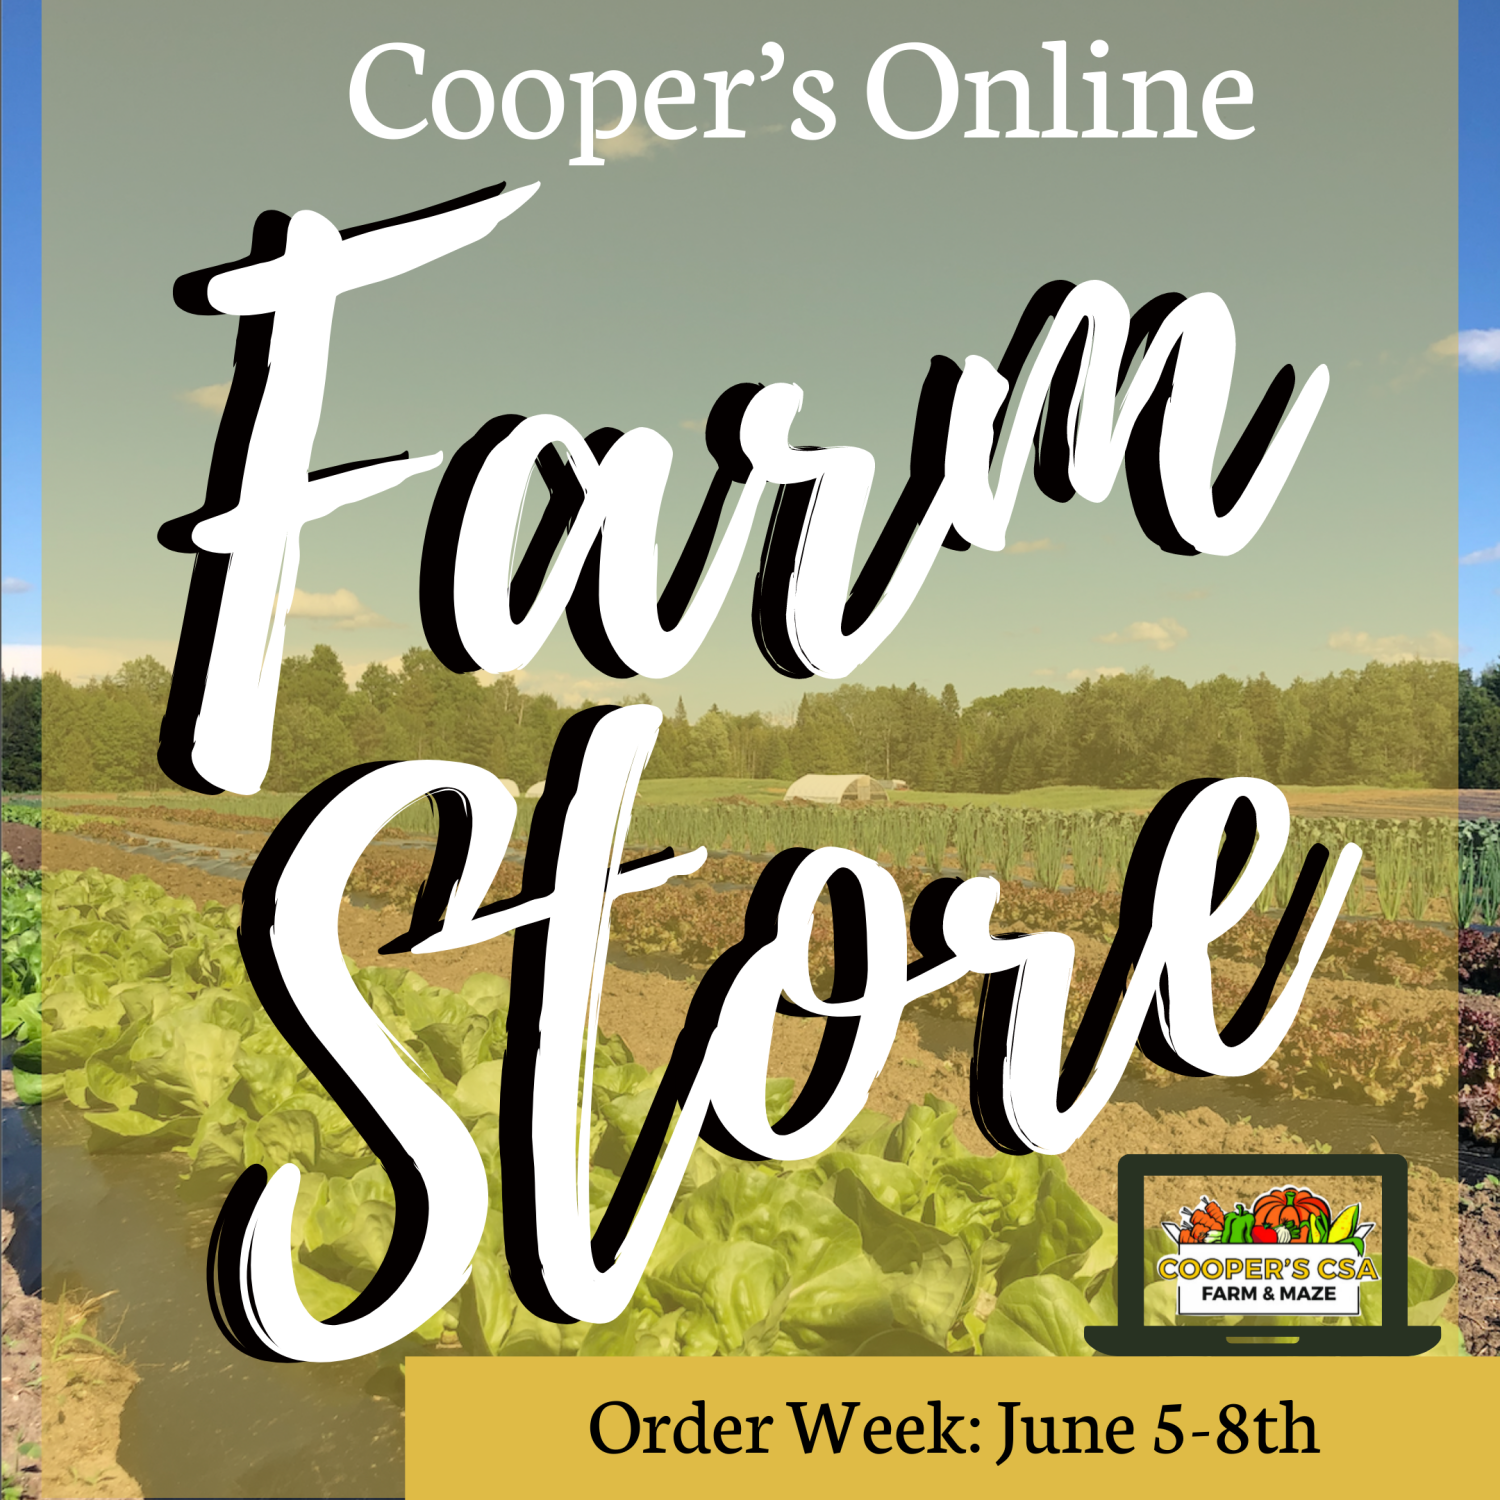 Coopers CSA Online FarmStore- Order week June 5th-8th